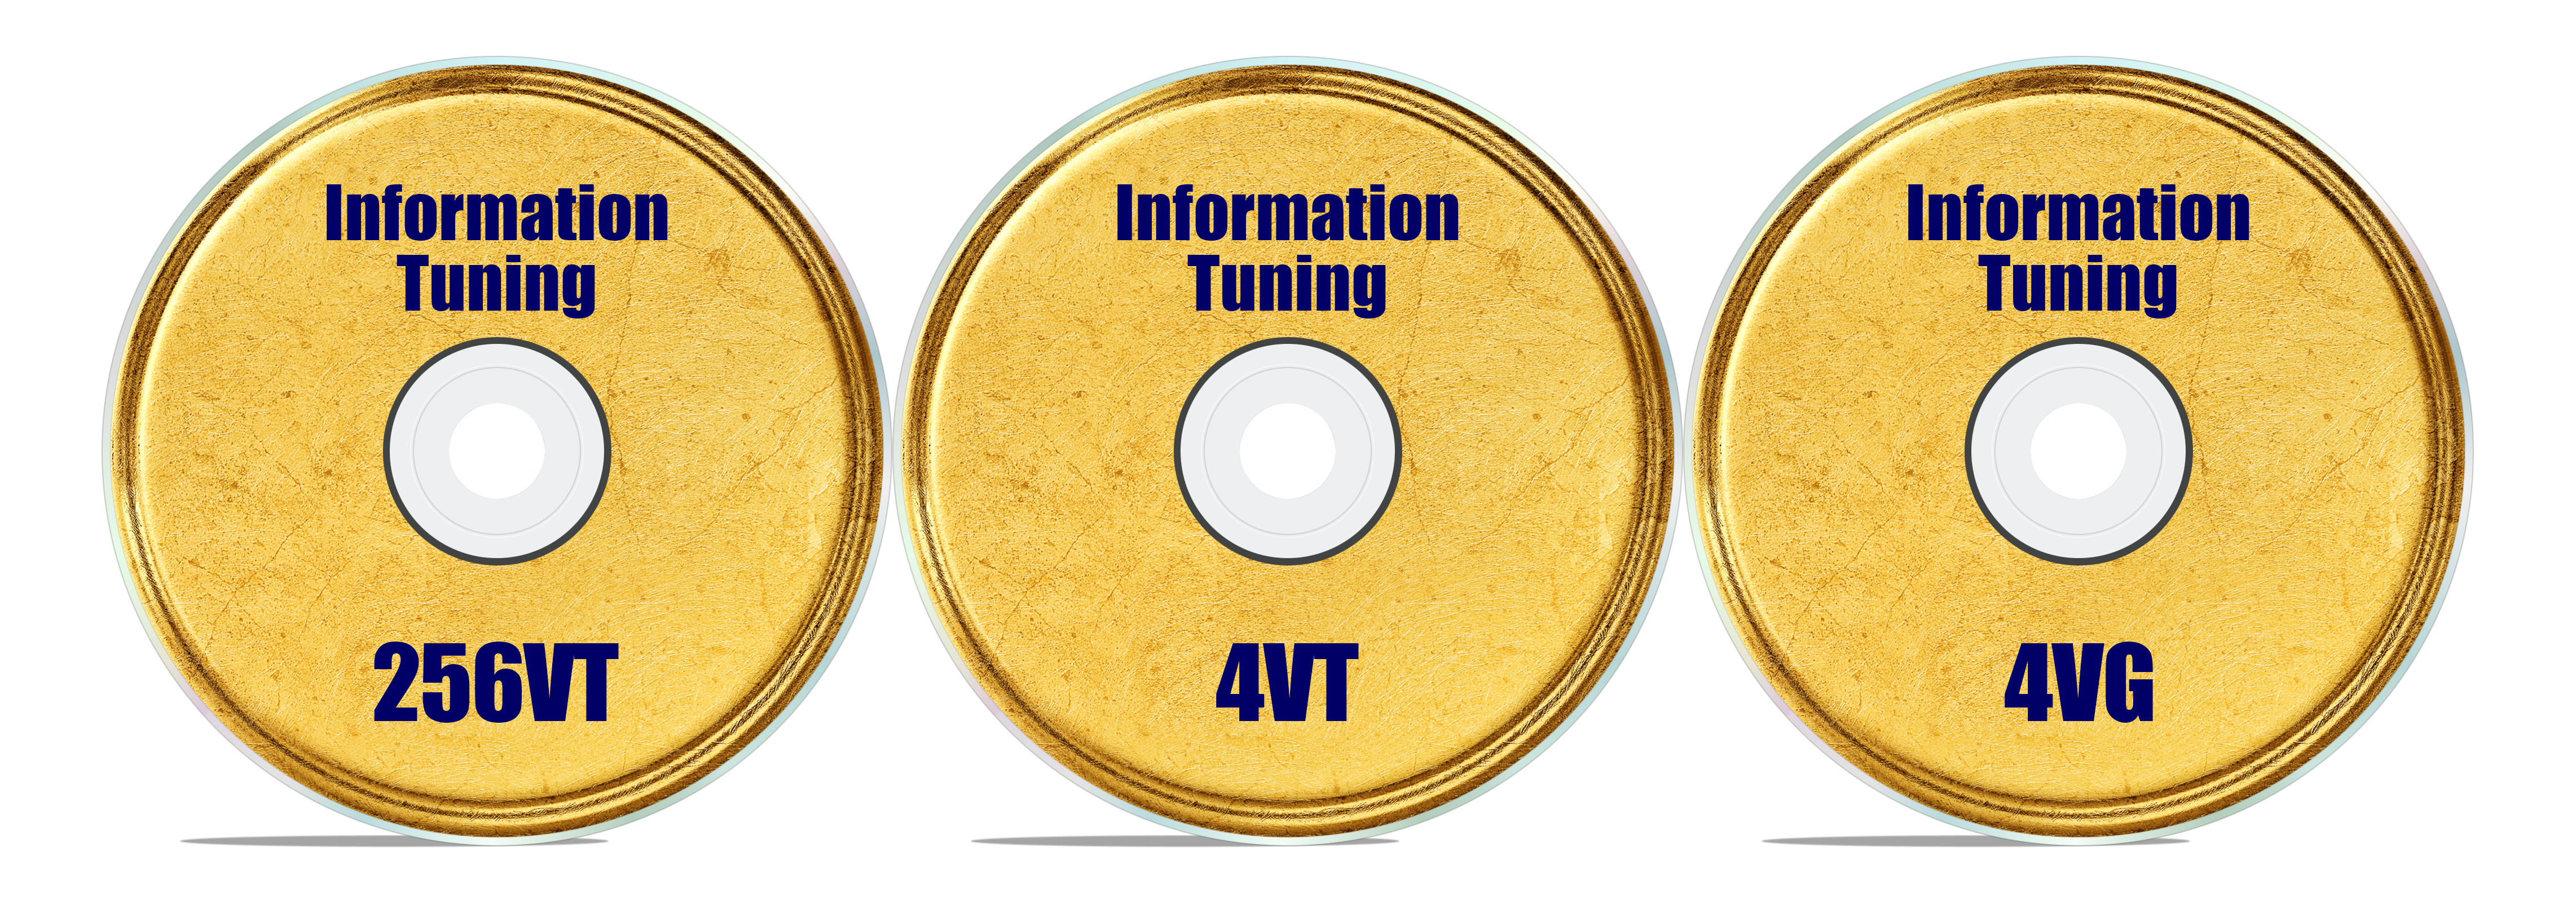 Information Tuning